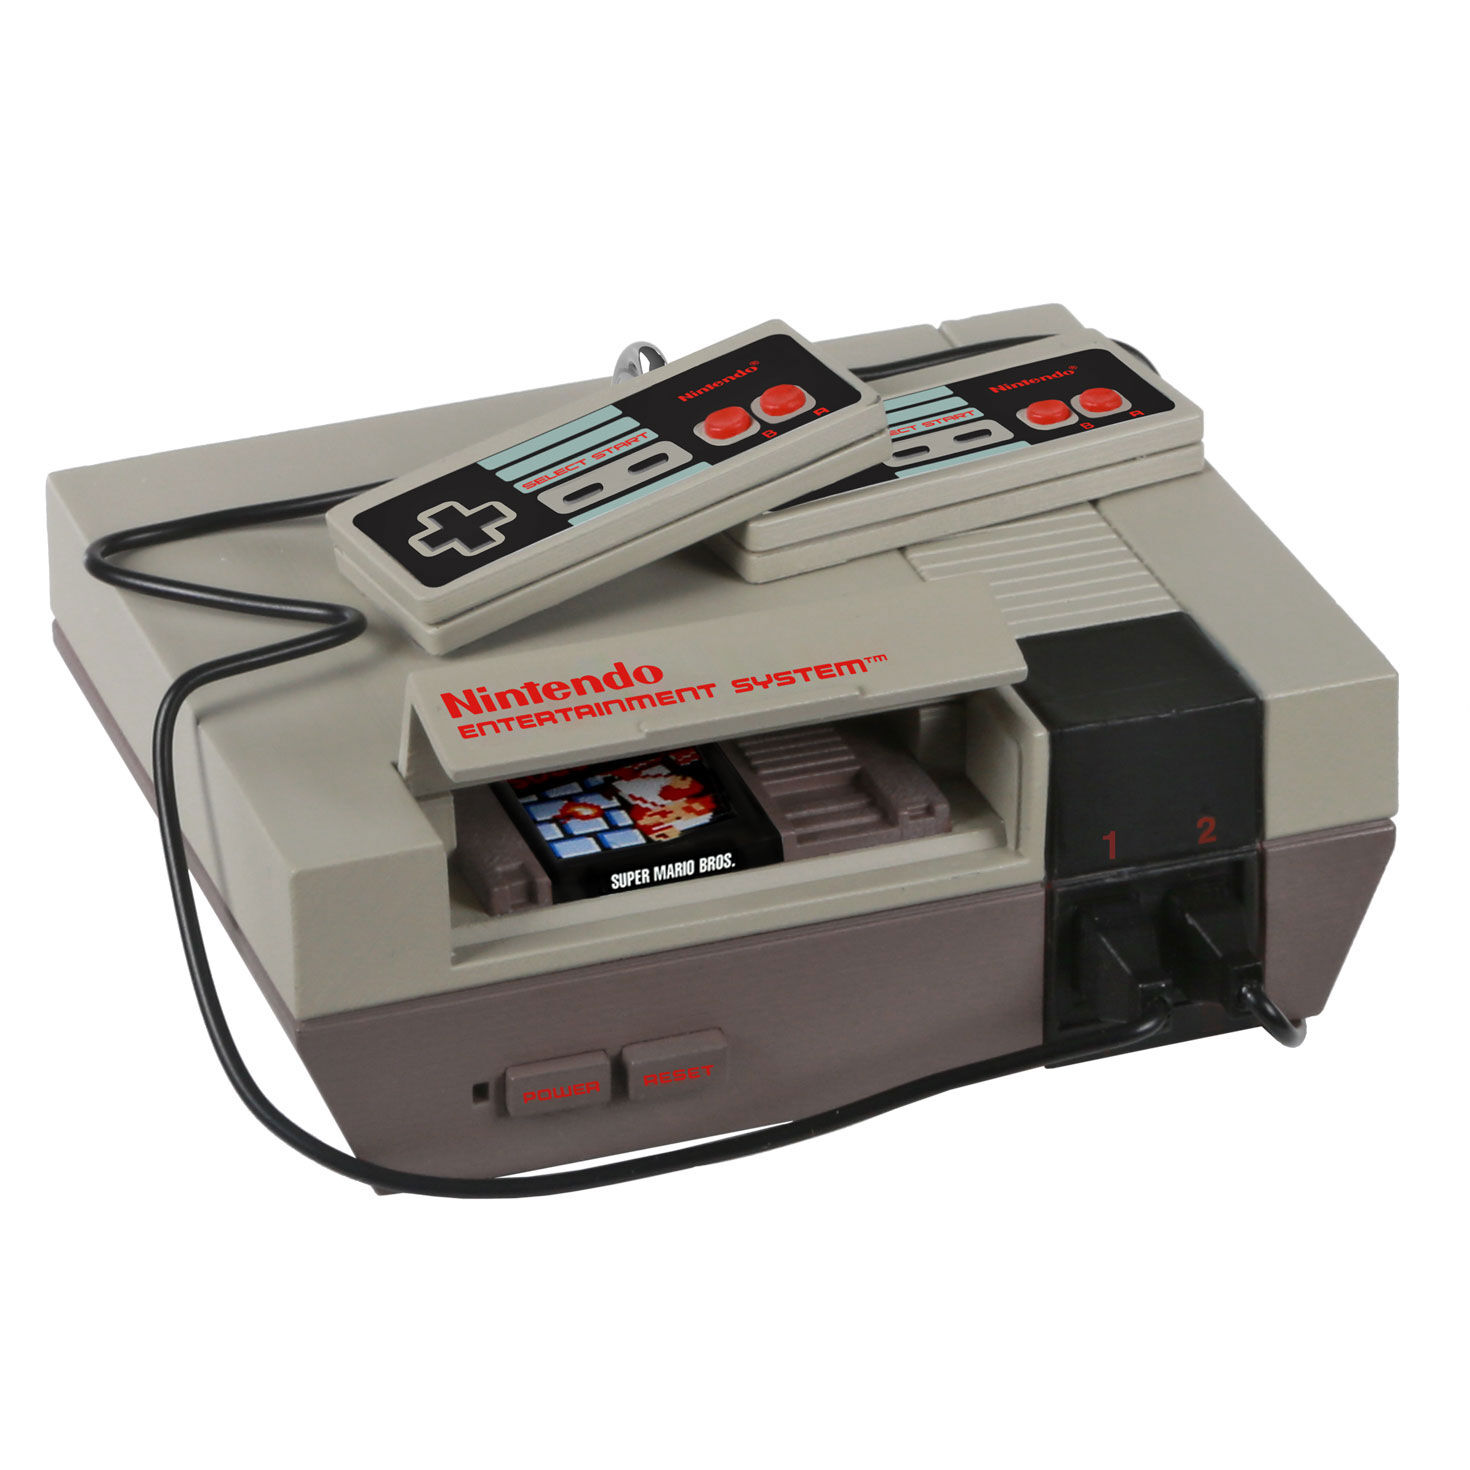 Nintendo Entertainment System™ NES™ Console Ornament With Light and Sound -  Keepsake Ornaments - Hallmark